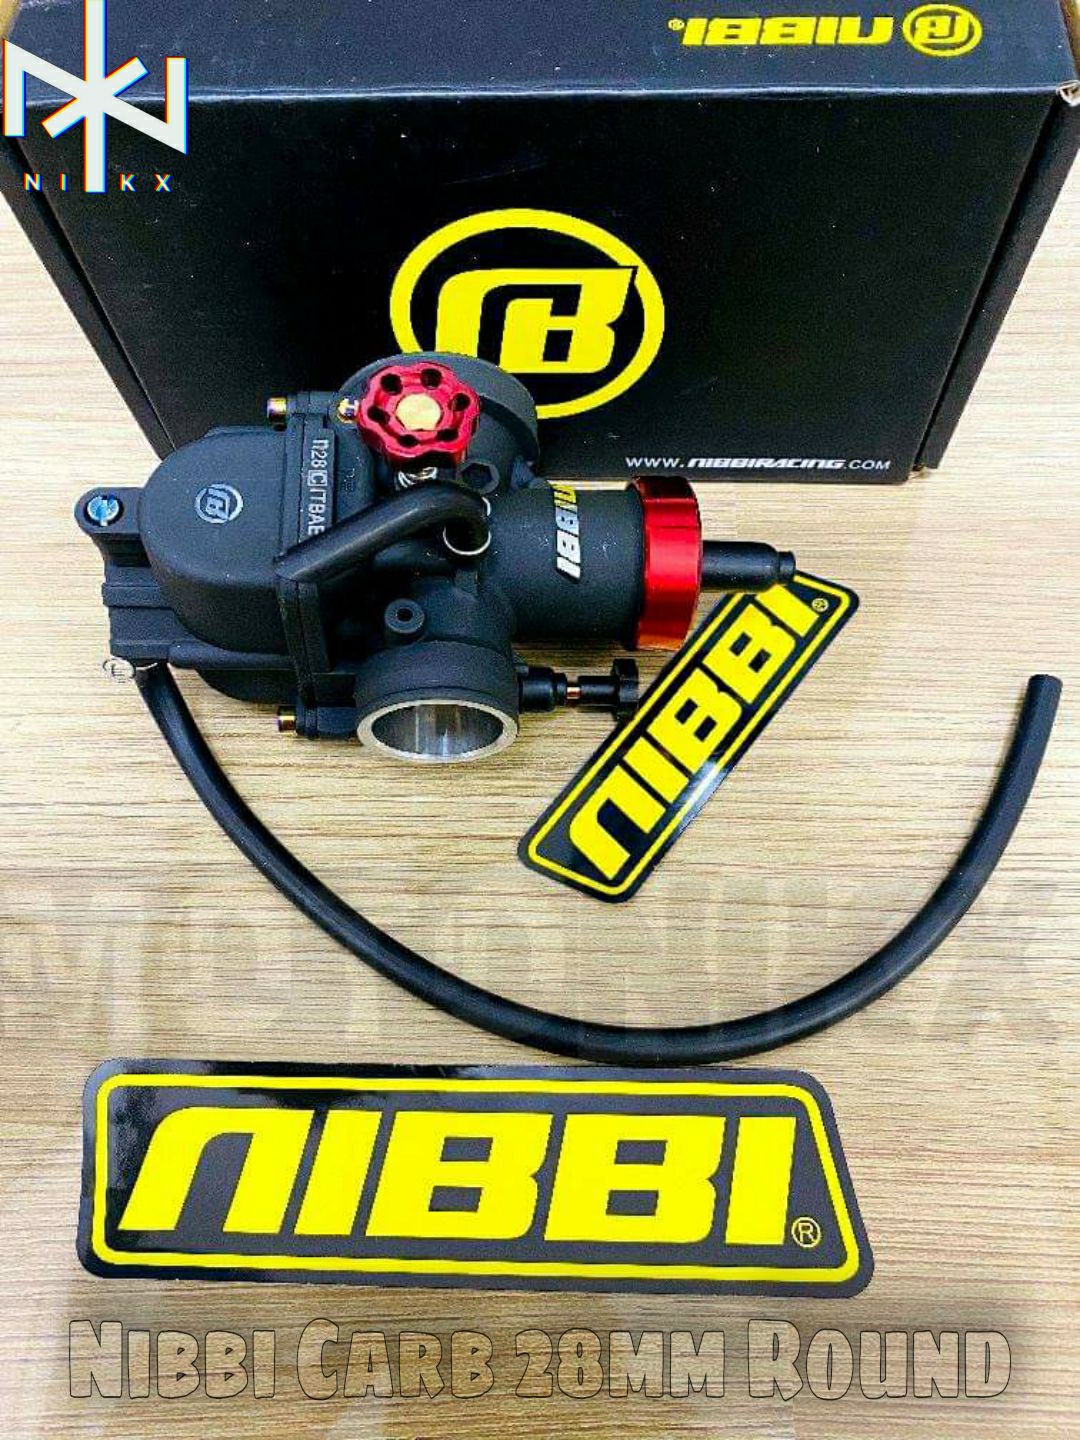 nibbi carburetor pwk26mm — NIBBIRACING